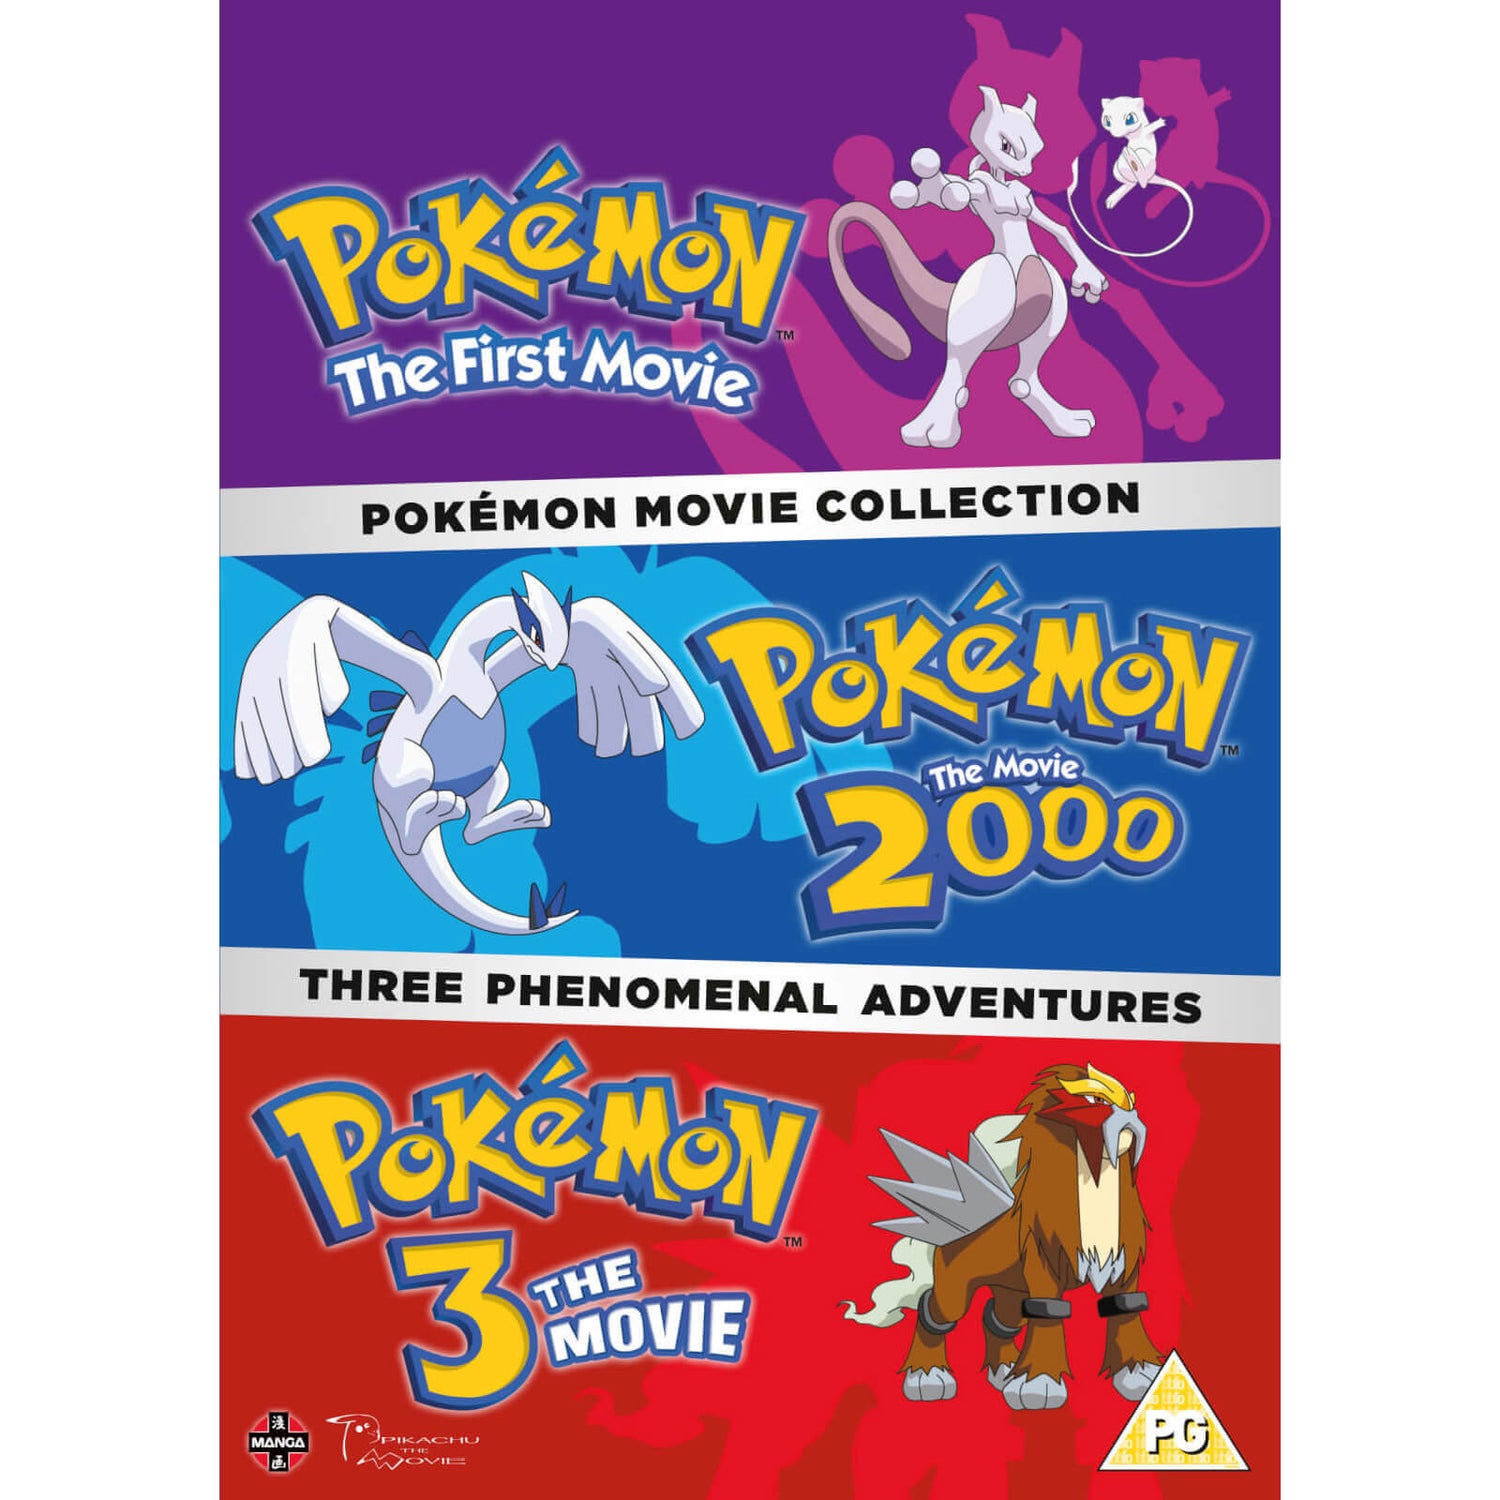 Pokemon Movie Collectie (Pokemon The First Movie, Pokemon The Movie 2000, Pokemon 3 The Movie)